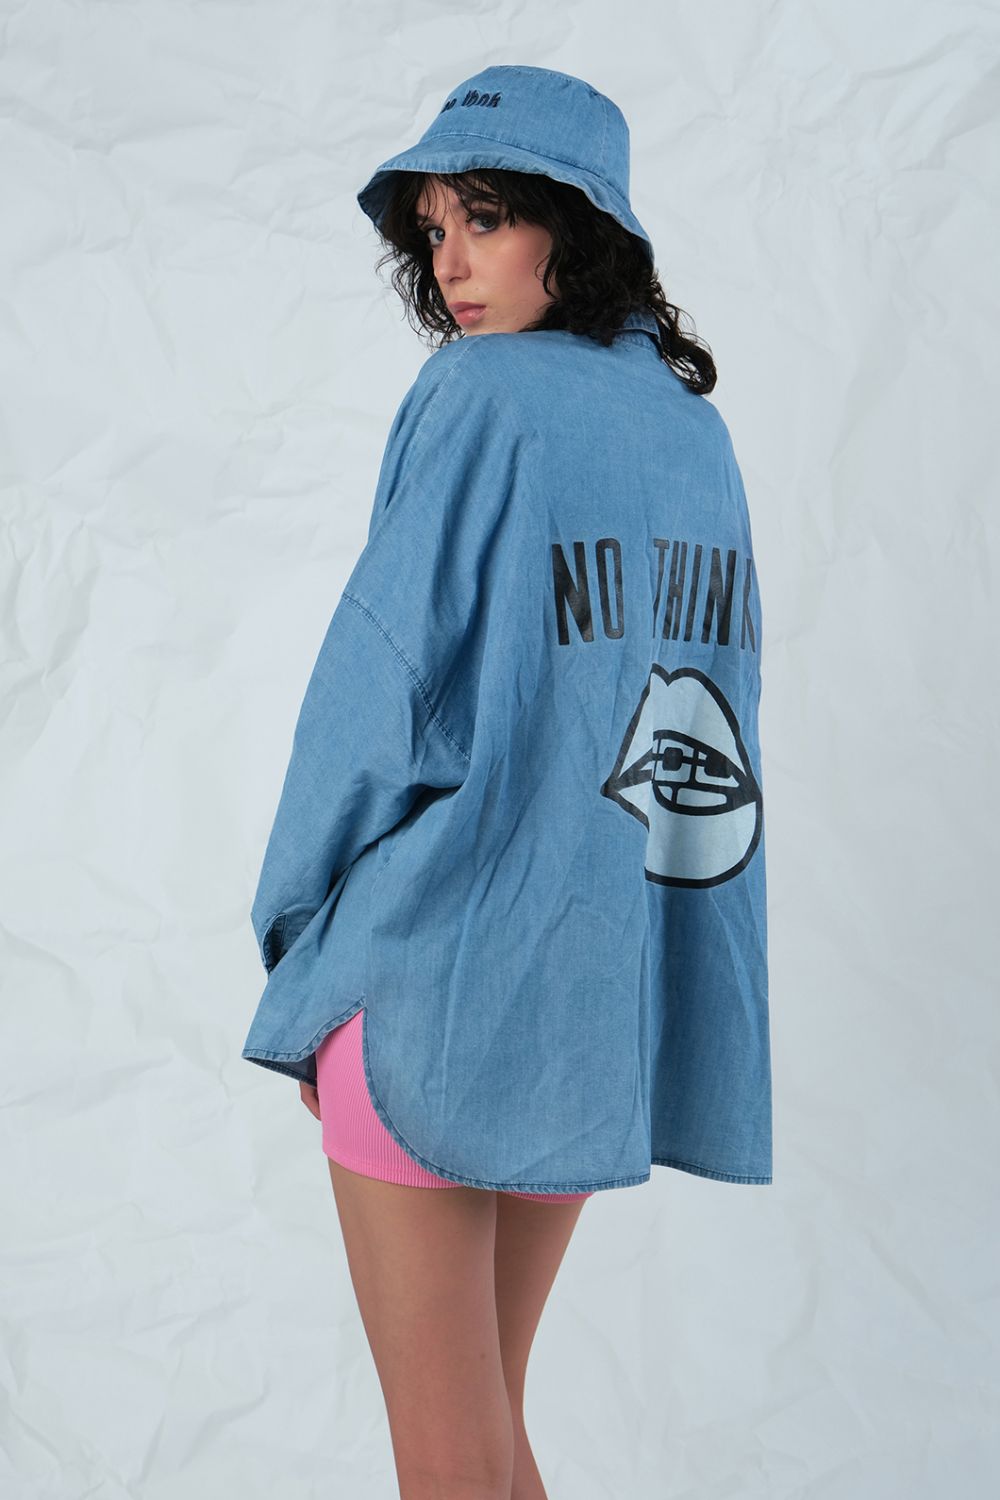 Denim Shirt Billie Eilish Oversized Blue 